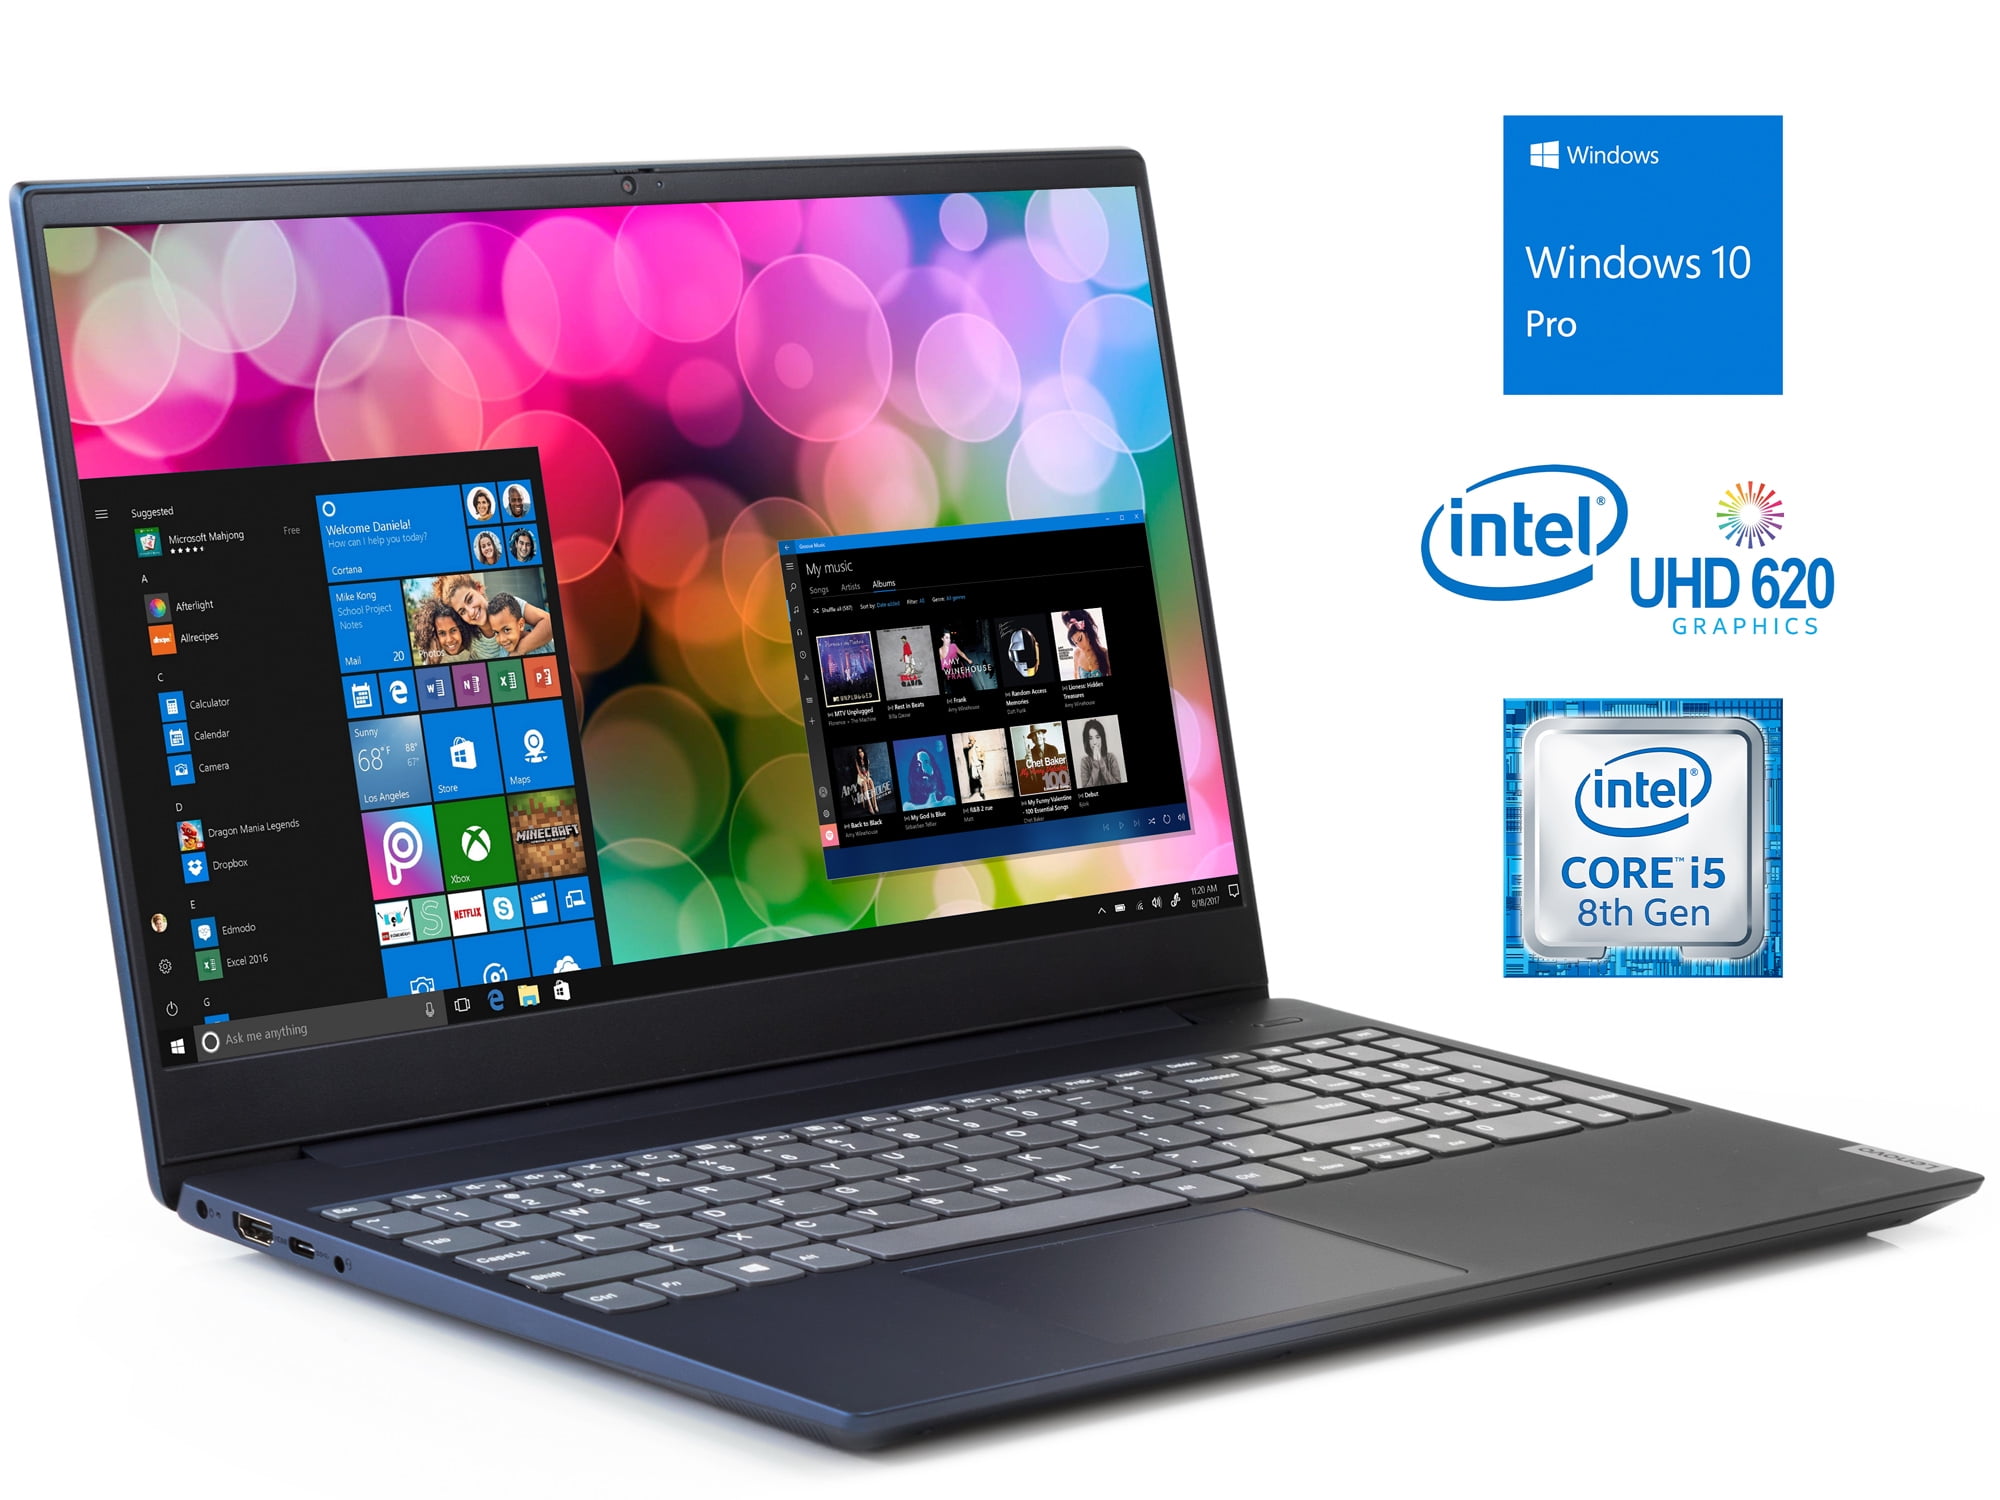 Lenovo IdeaPad S340 Notebook, 15.6" FHD Display, Intel Core i5-8265U